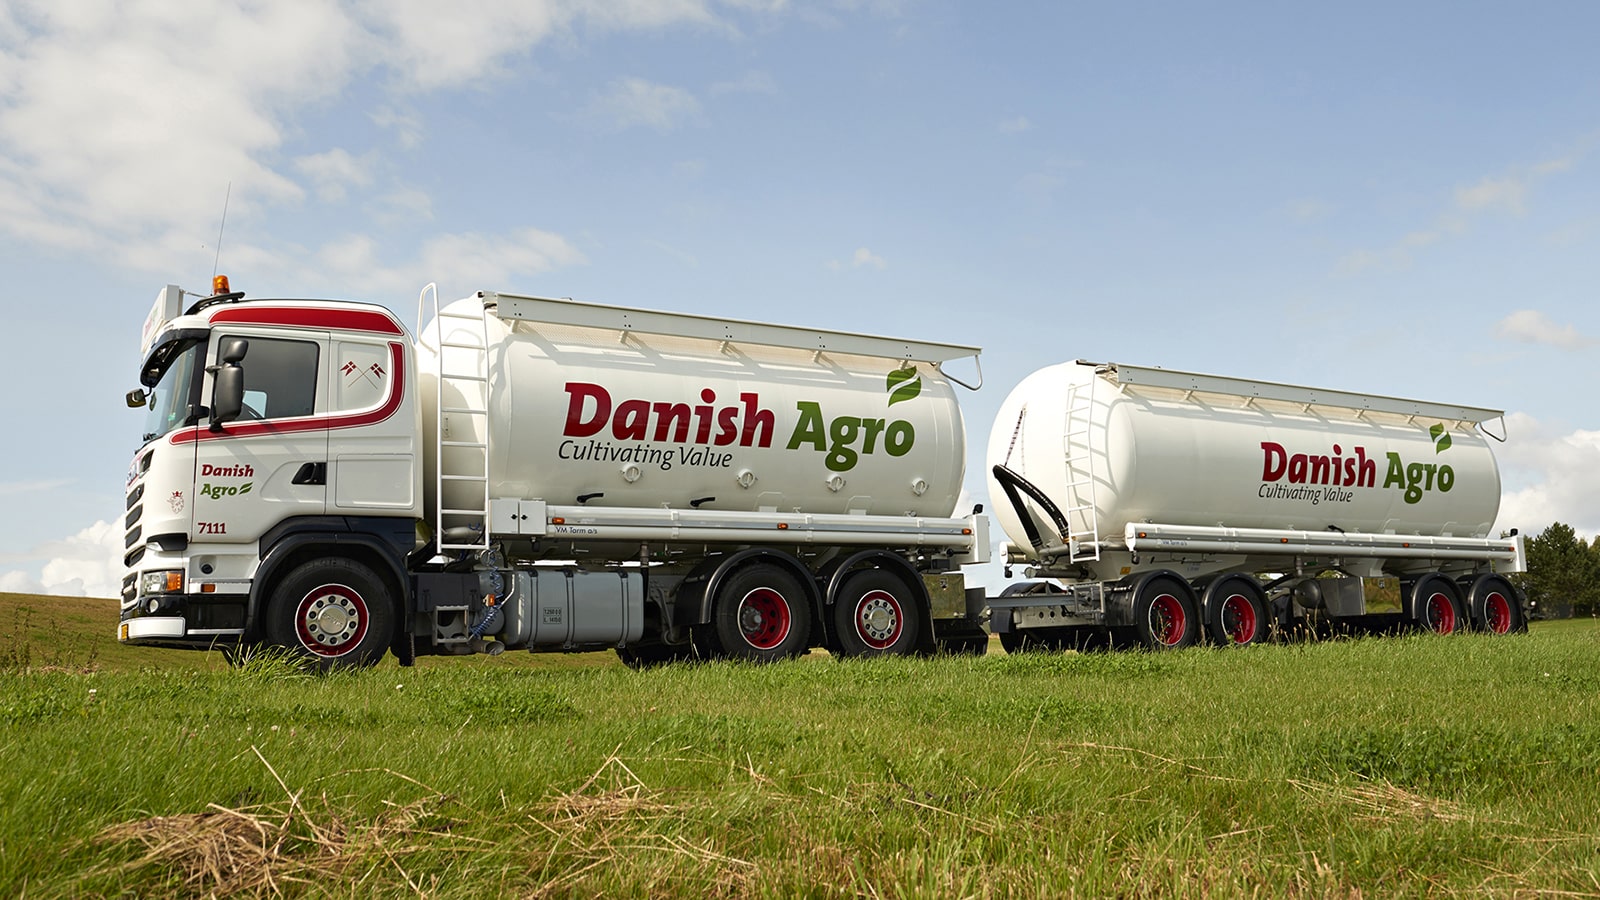 Danish Agro case study